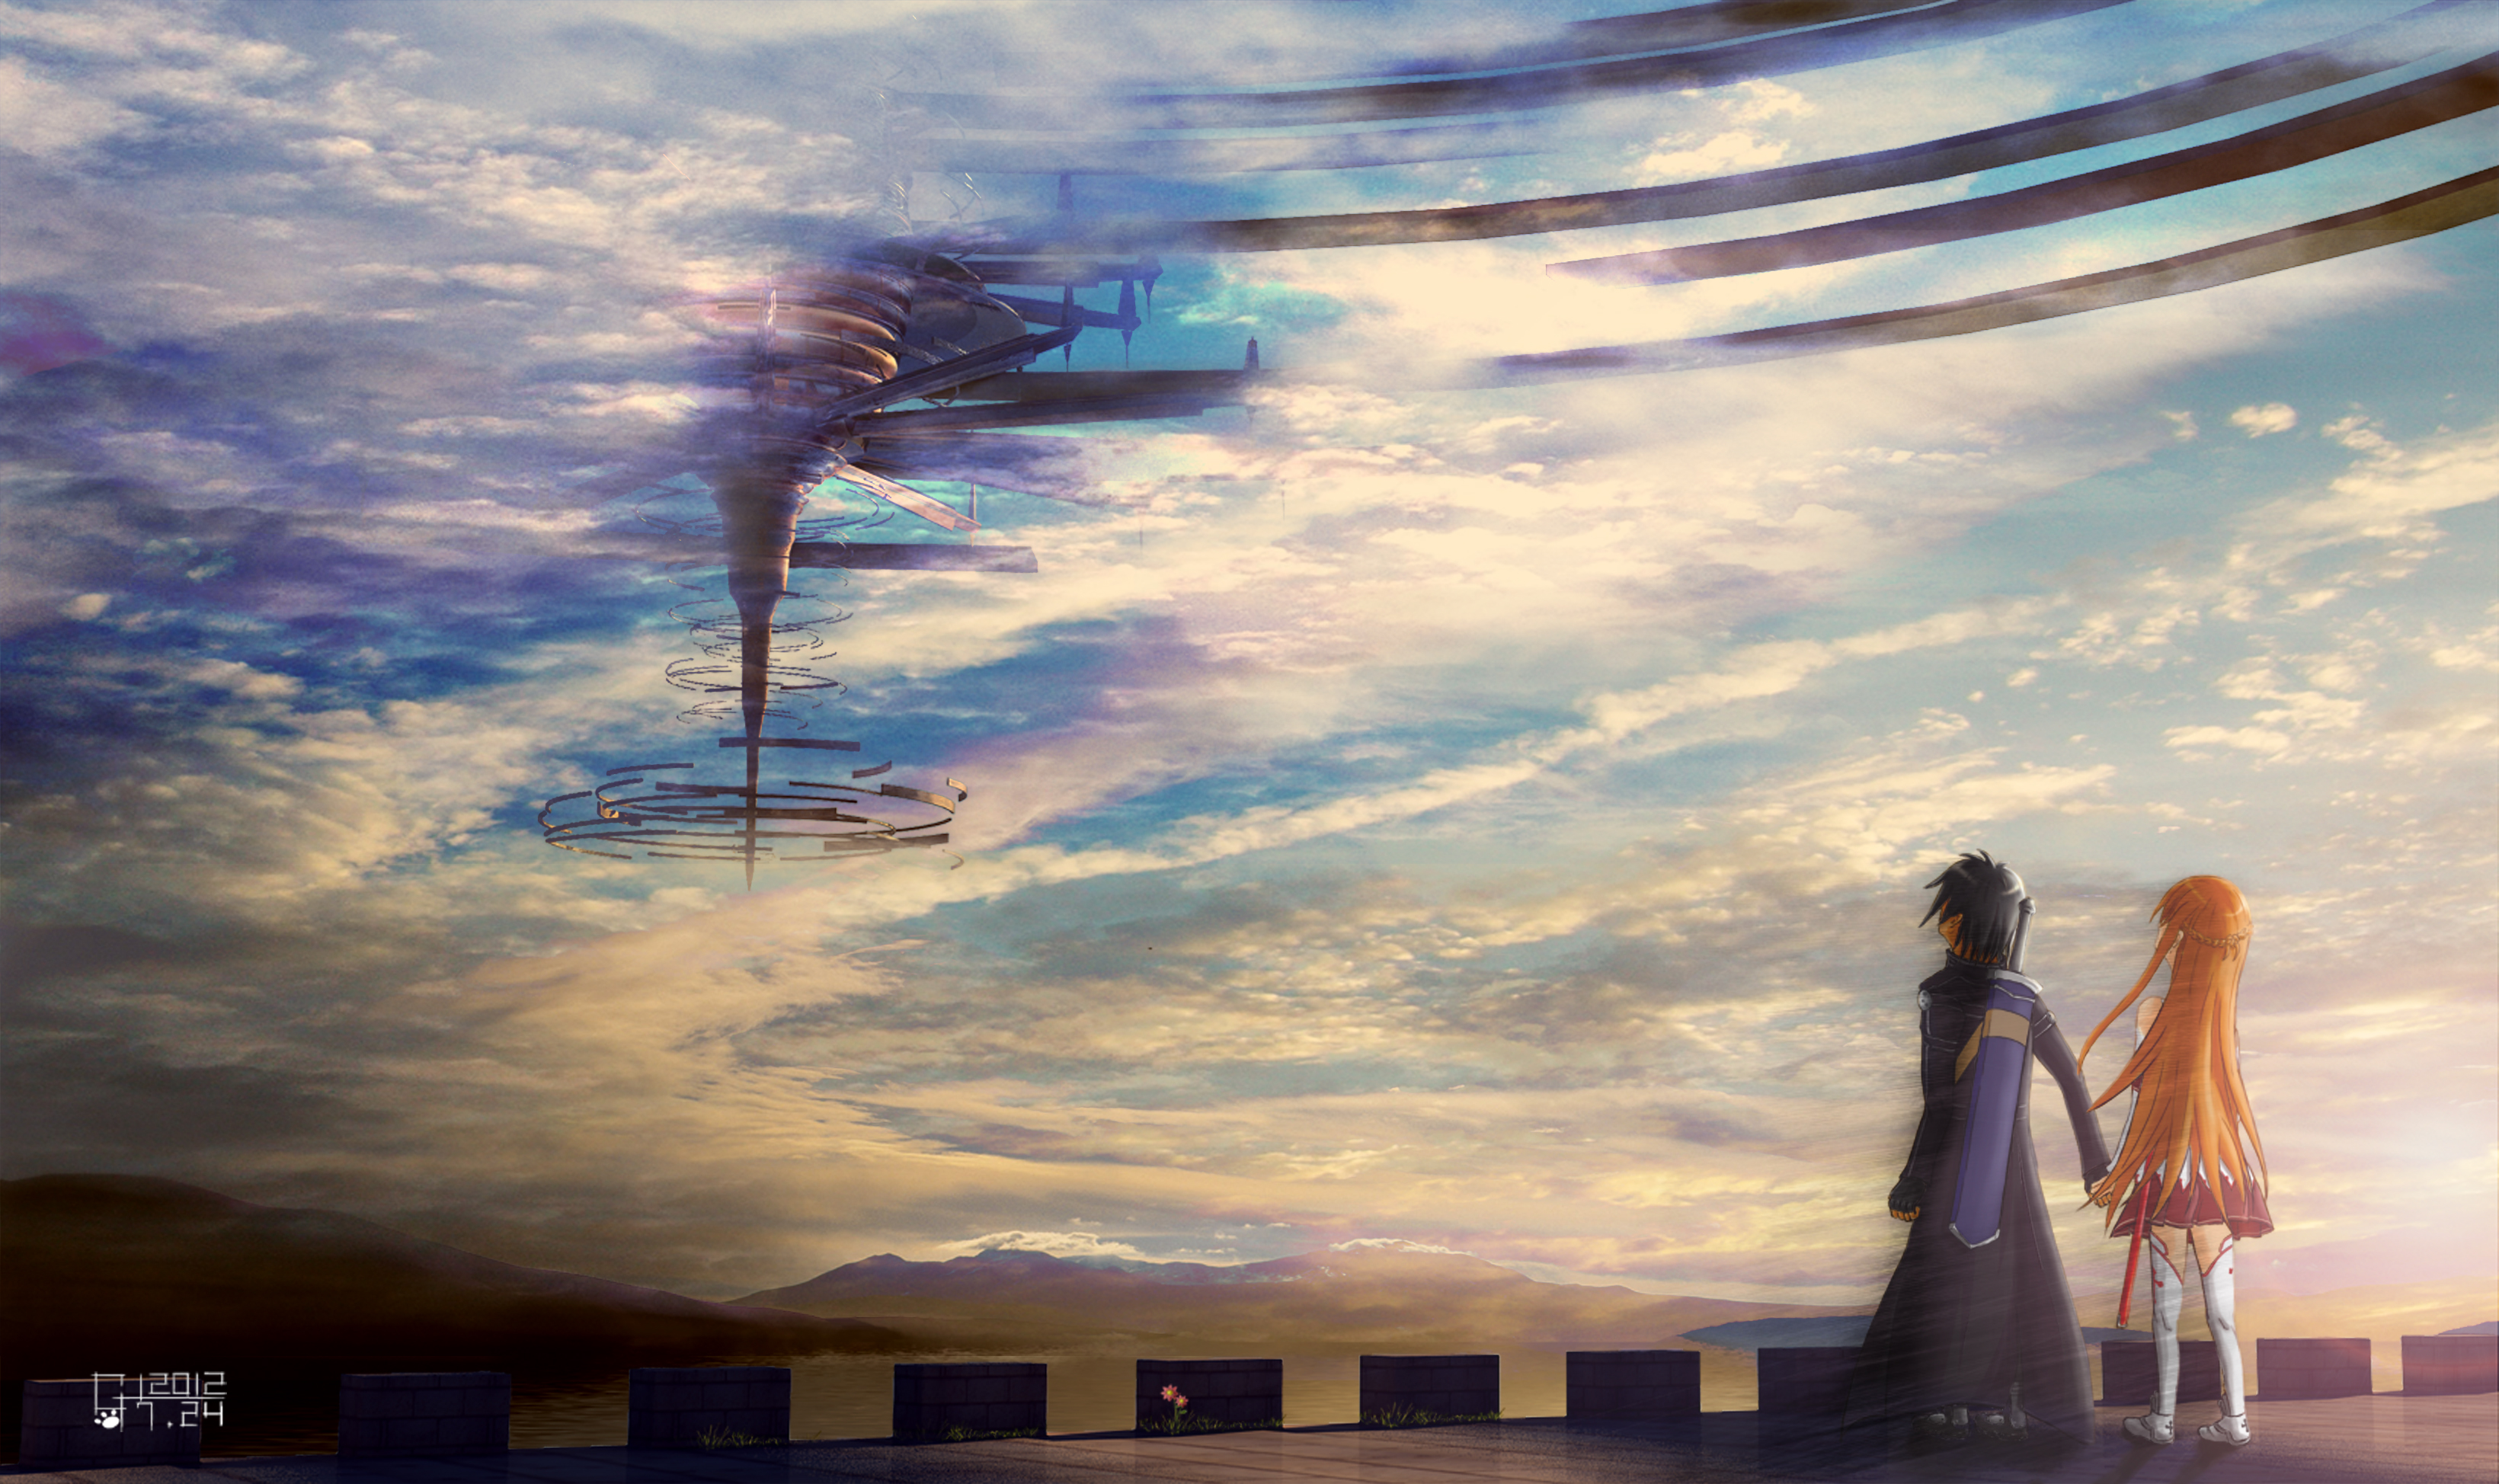 Anime Sword Art Online HD Wallpaper | Background Image